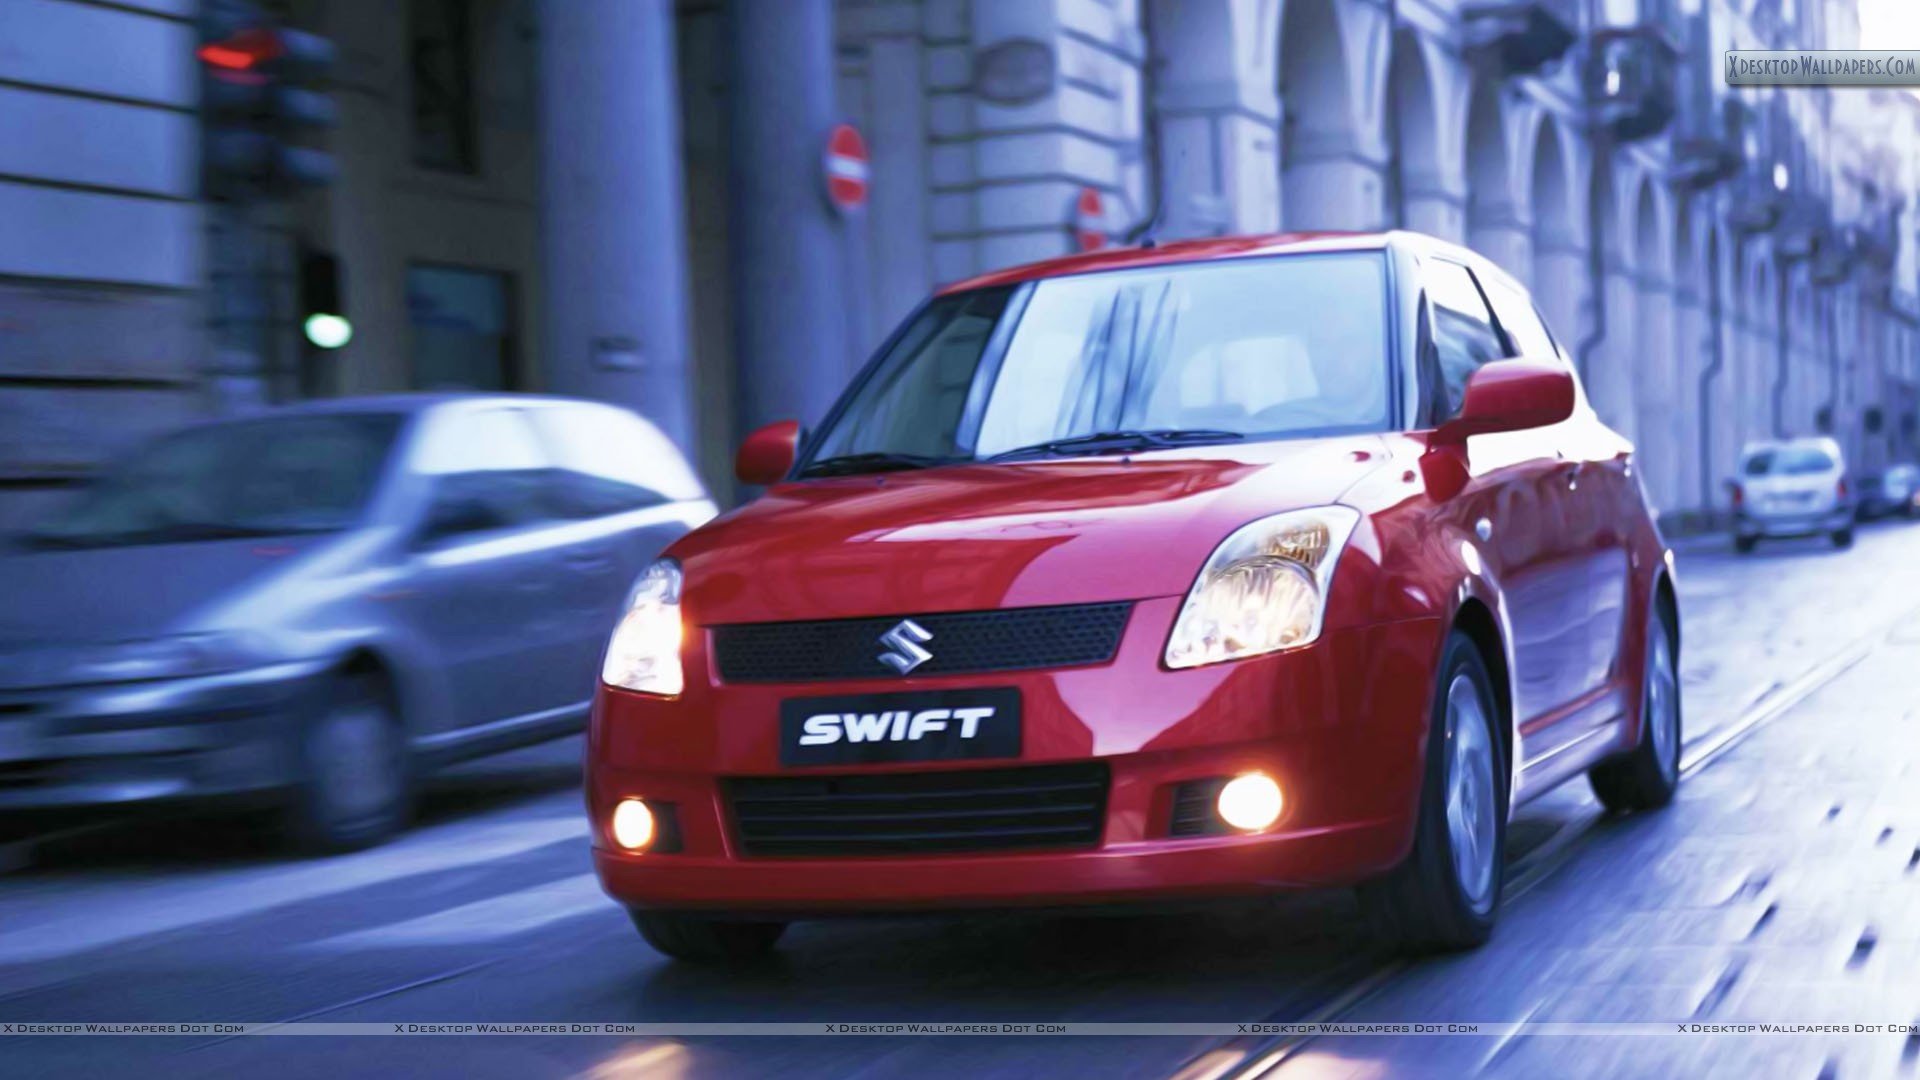 Suzuki Swift Wallpapers Photos Images in HD